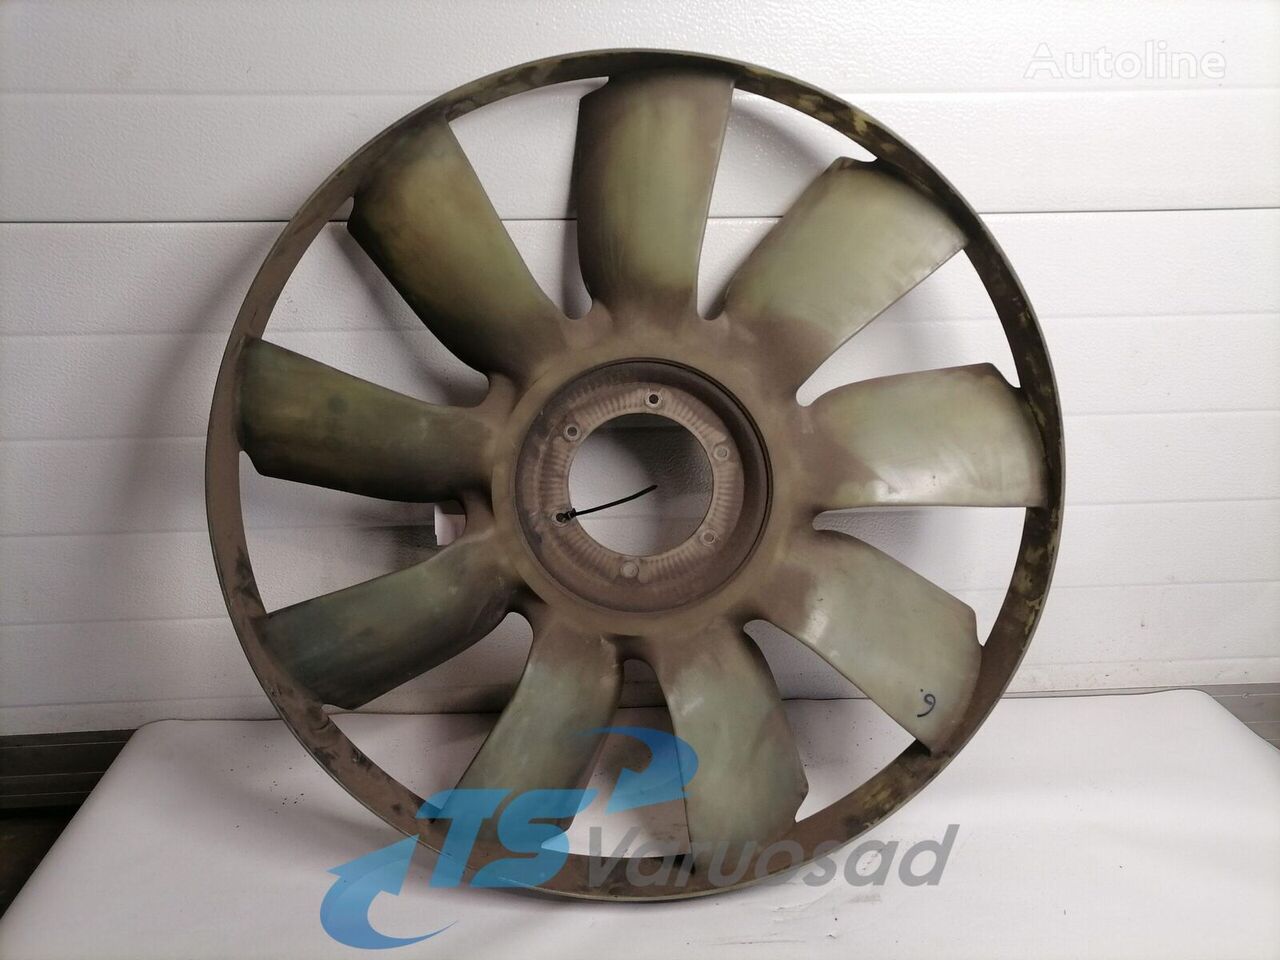 ventola del radiatore MAN Cooling fan 51066010279 per trattore stradale MAN